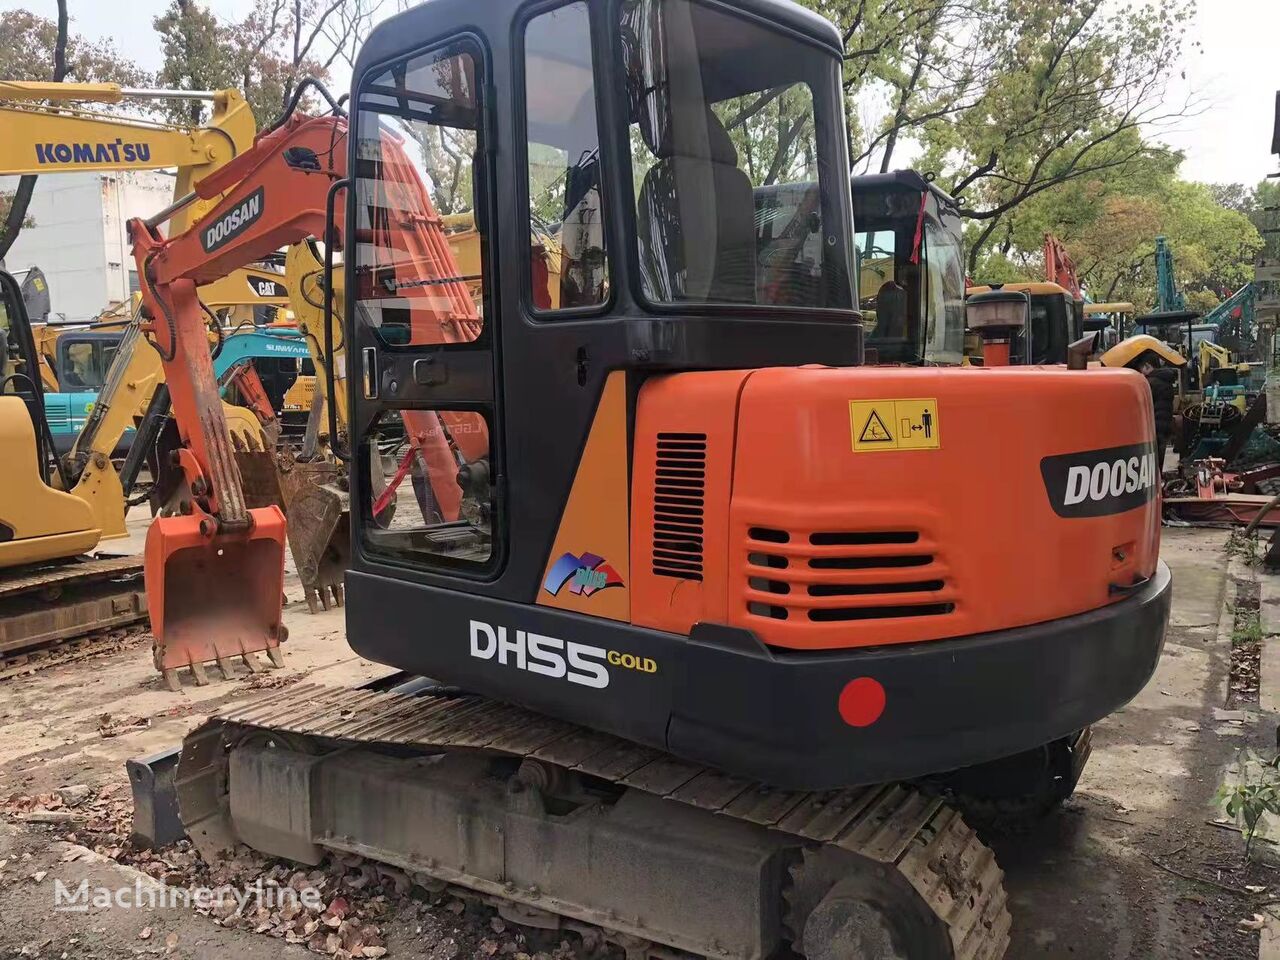 Doosan dh55 mini excavator